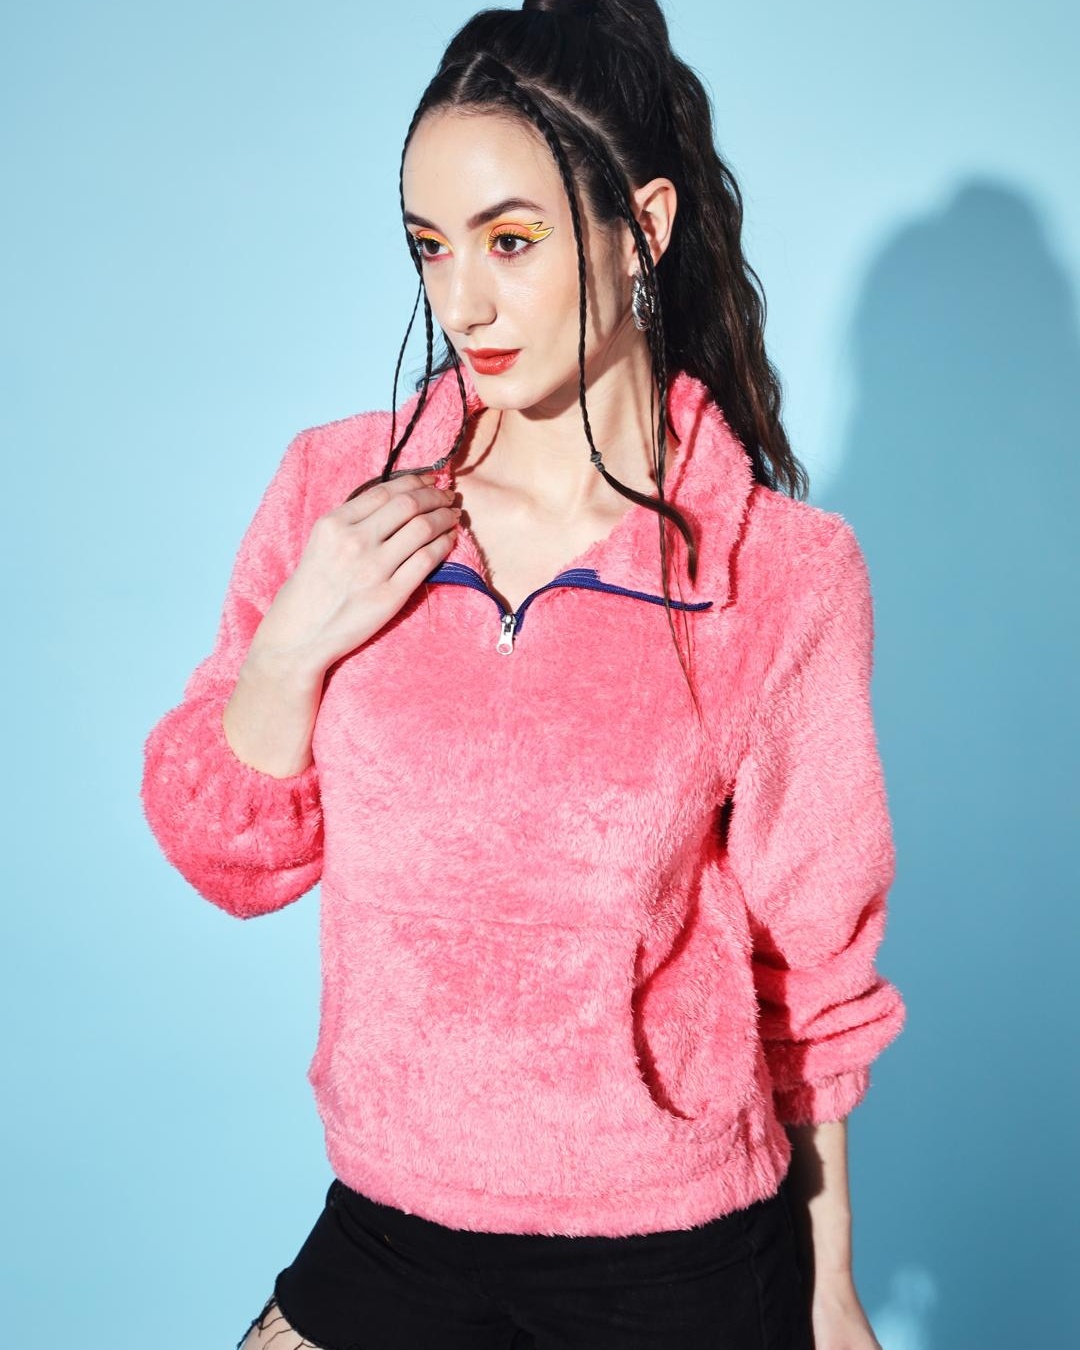 Shop Women's Pink Sweatshirt-Back